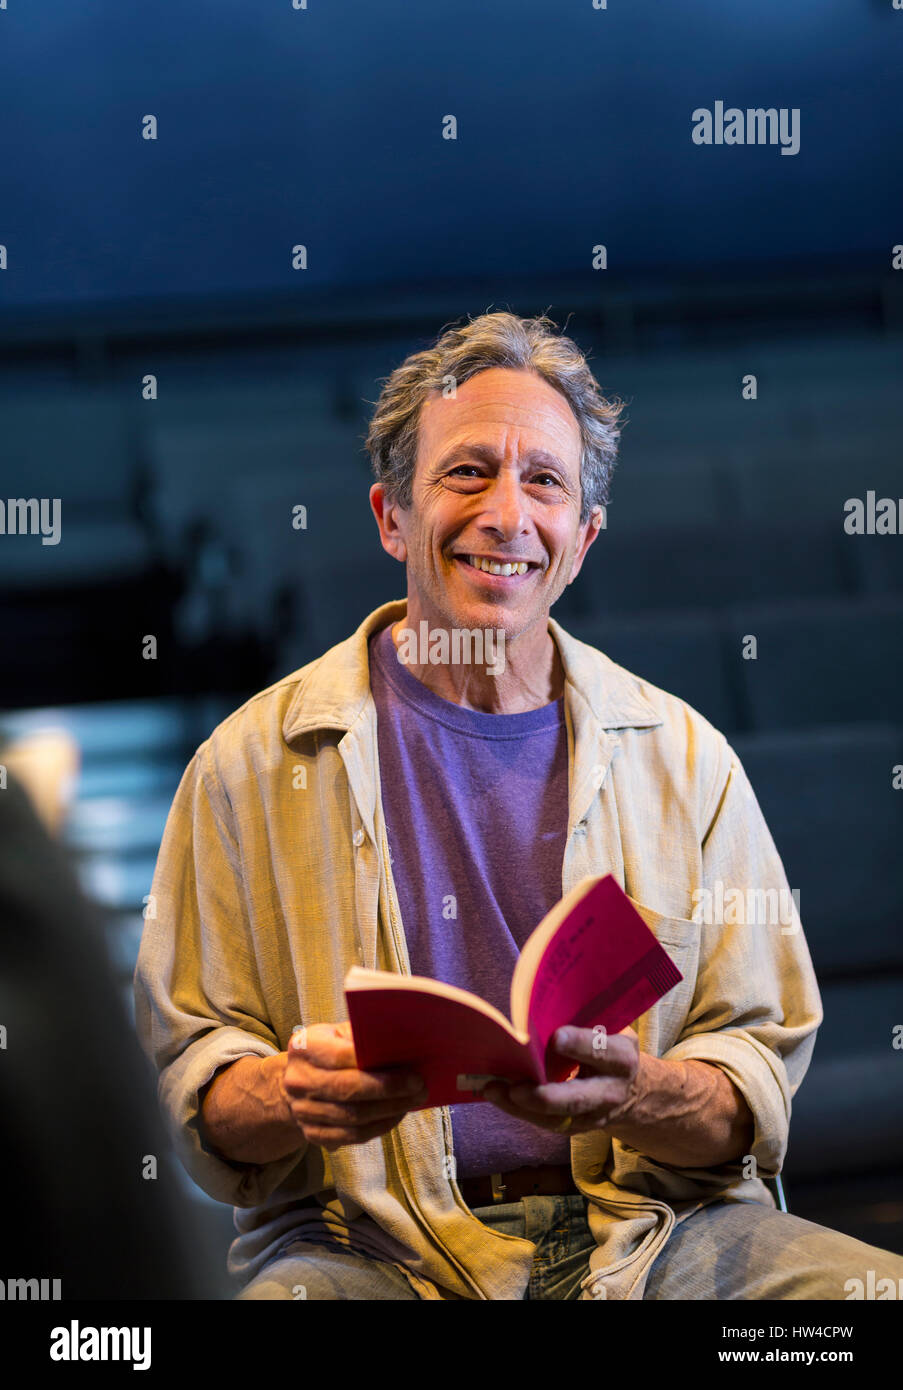 Portrait of smiling Caucasian actor holding script in theater Stock Photo